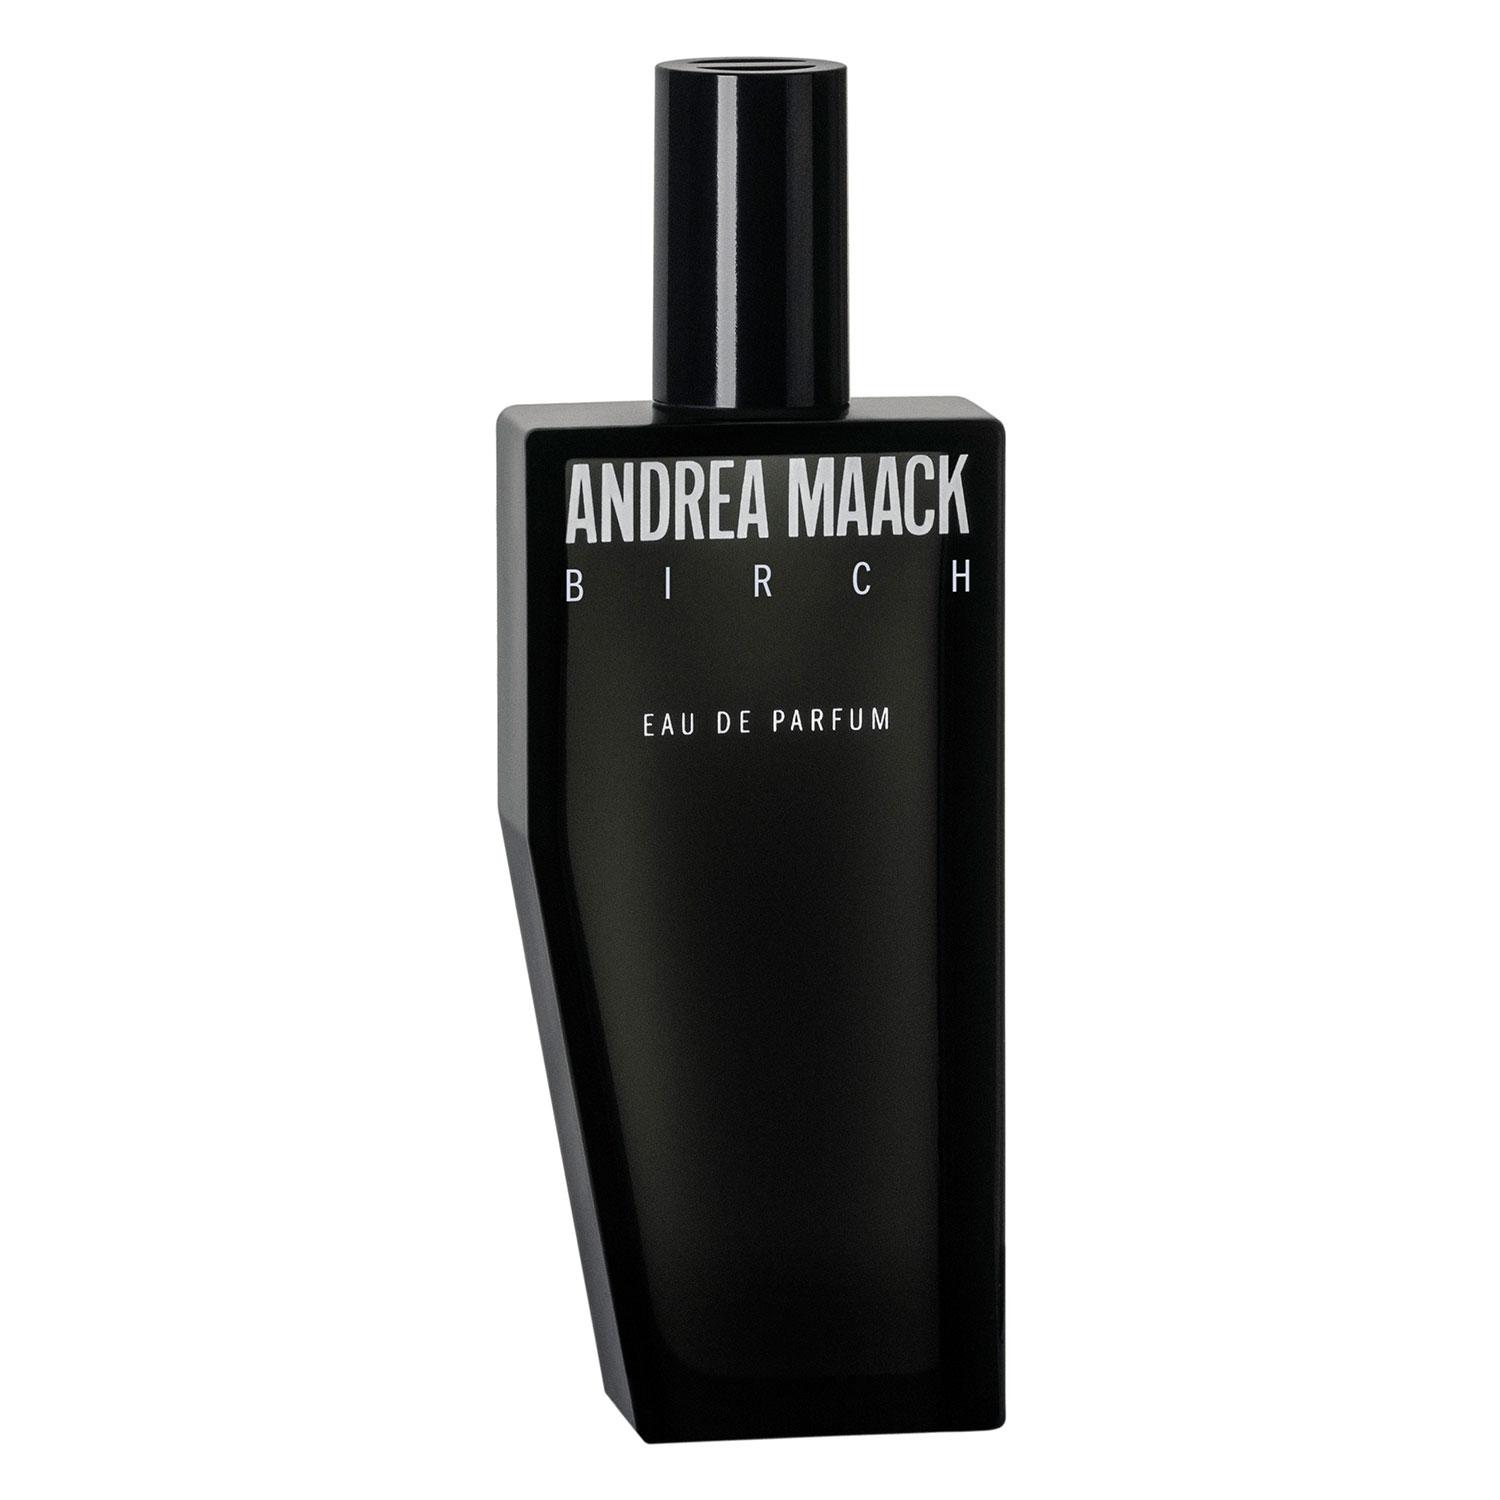 ANDREA MAACK - BIRCH Eau de Parfum